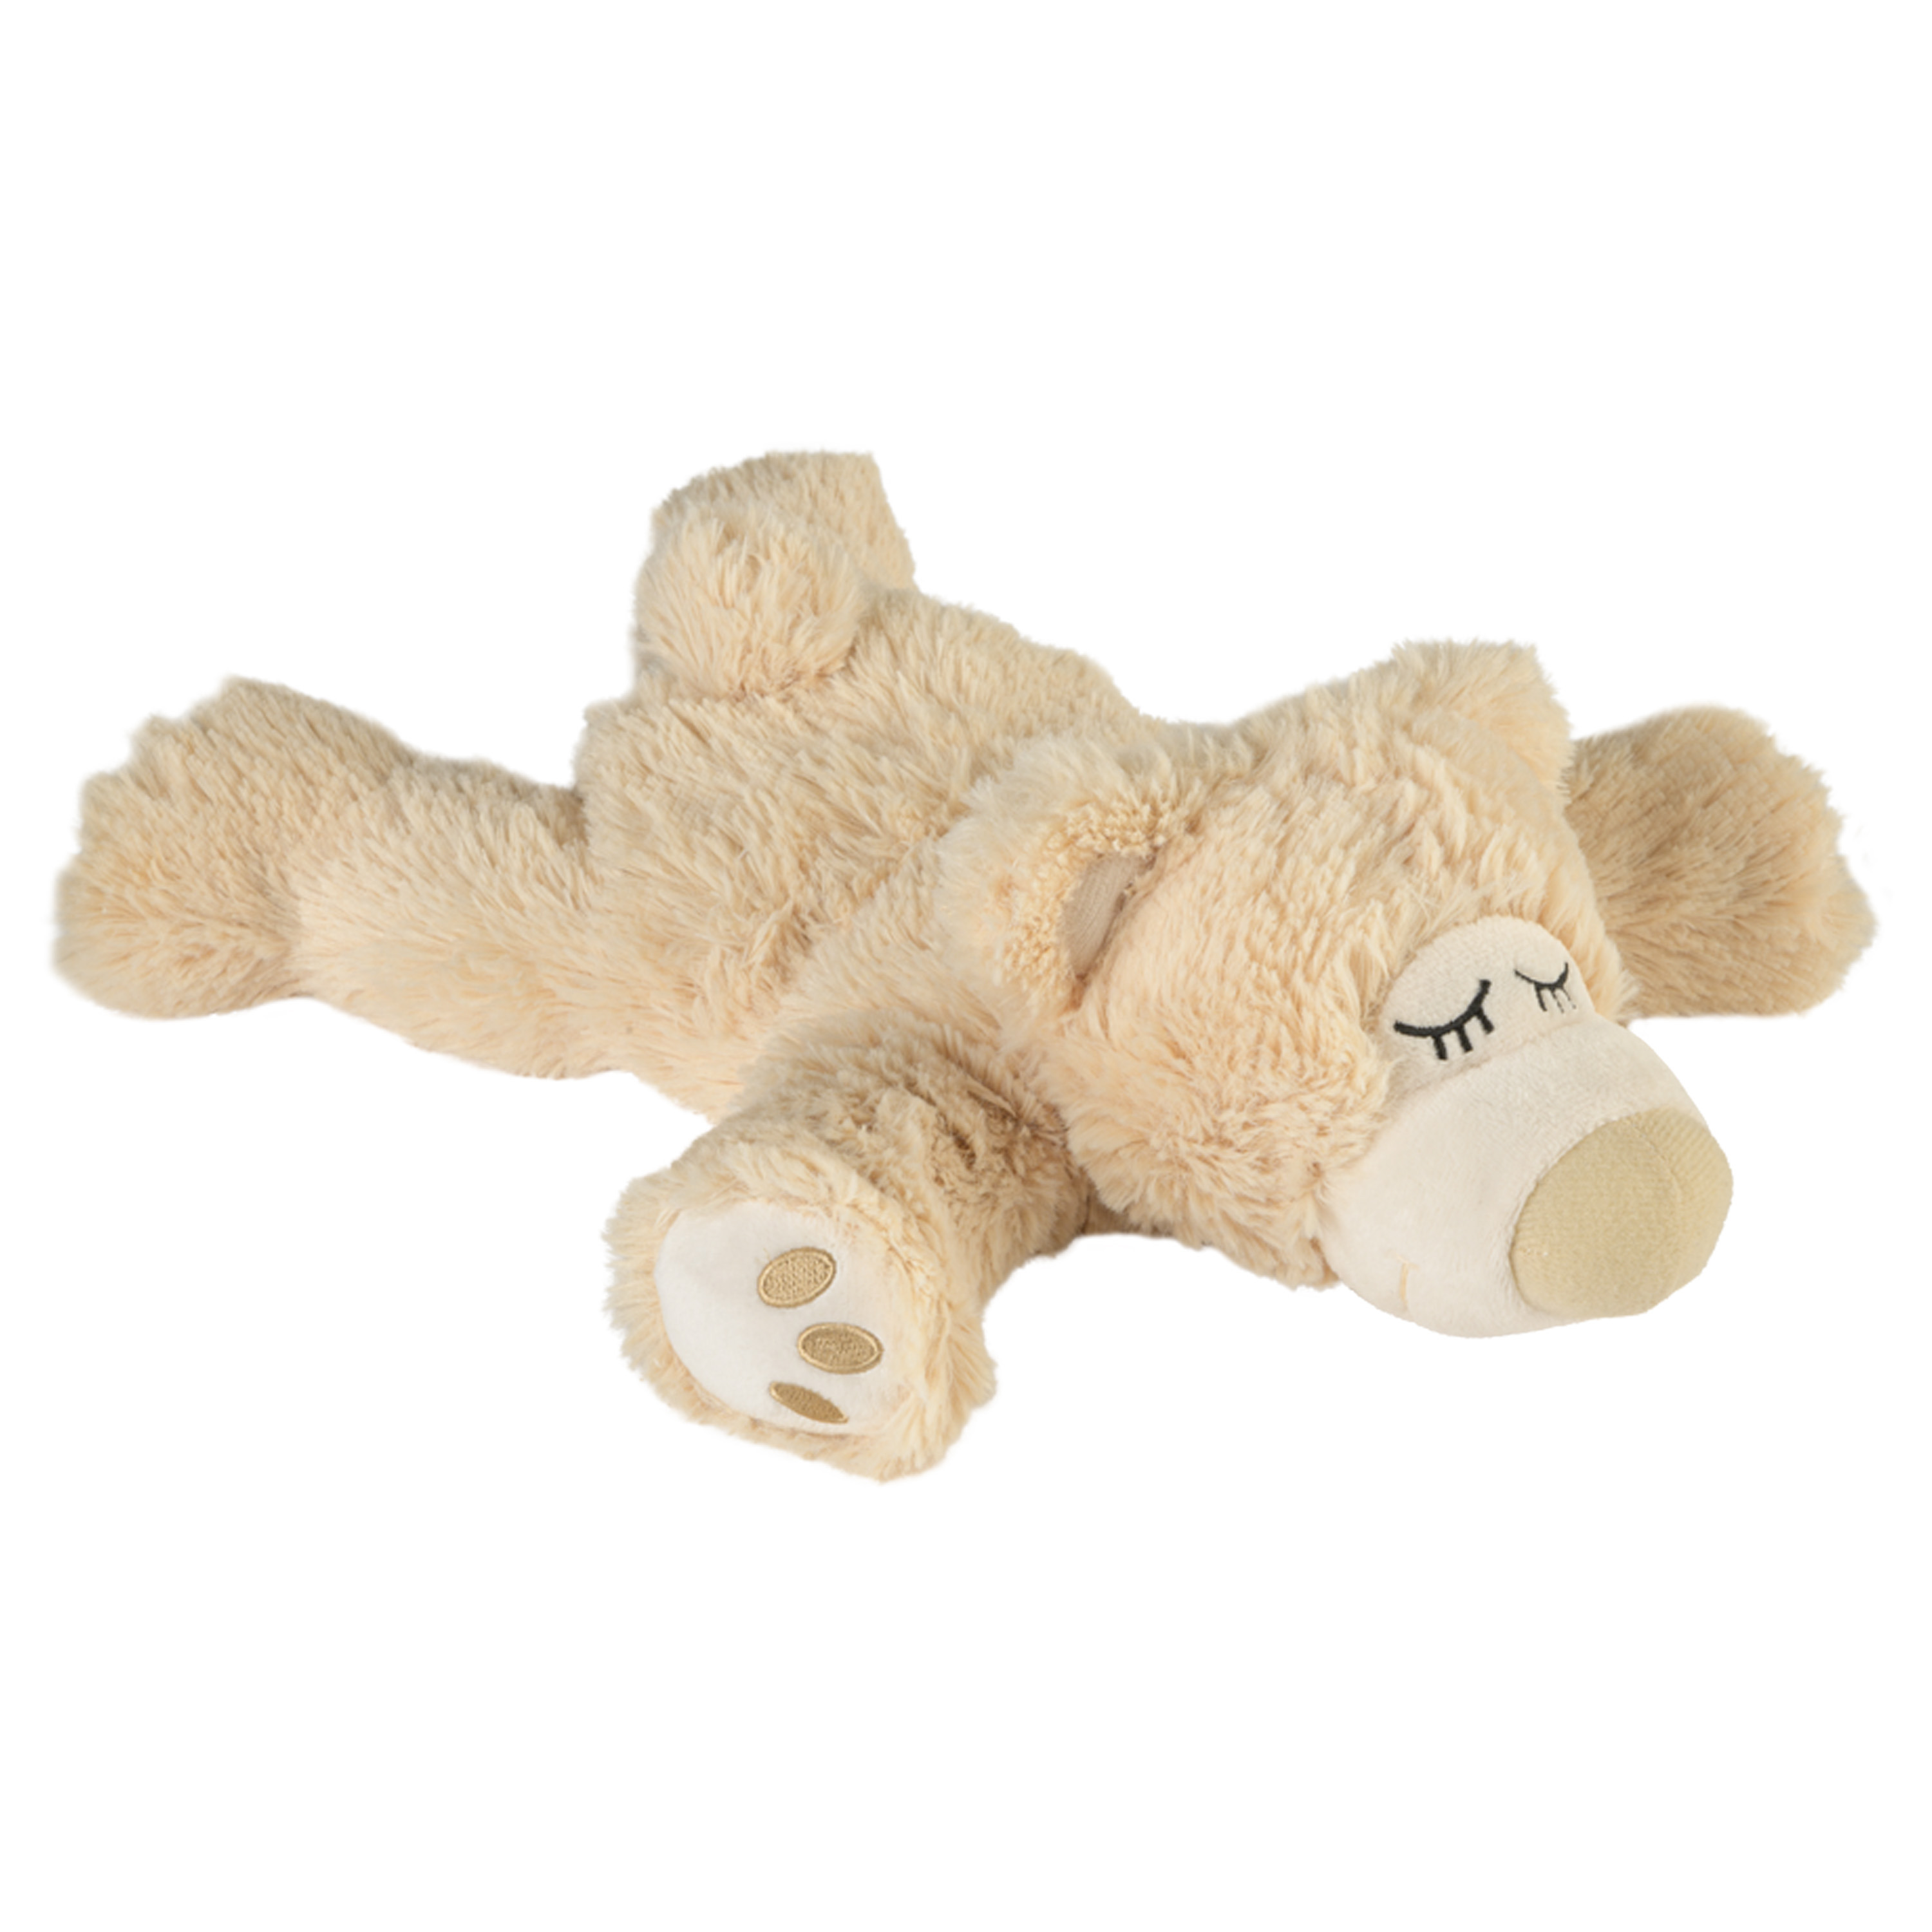 Warmte-magnetron opwarm knuffel Teddybeer beige 30 cm pittenzak